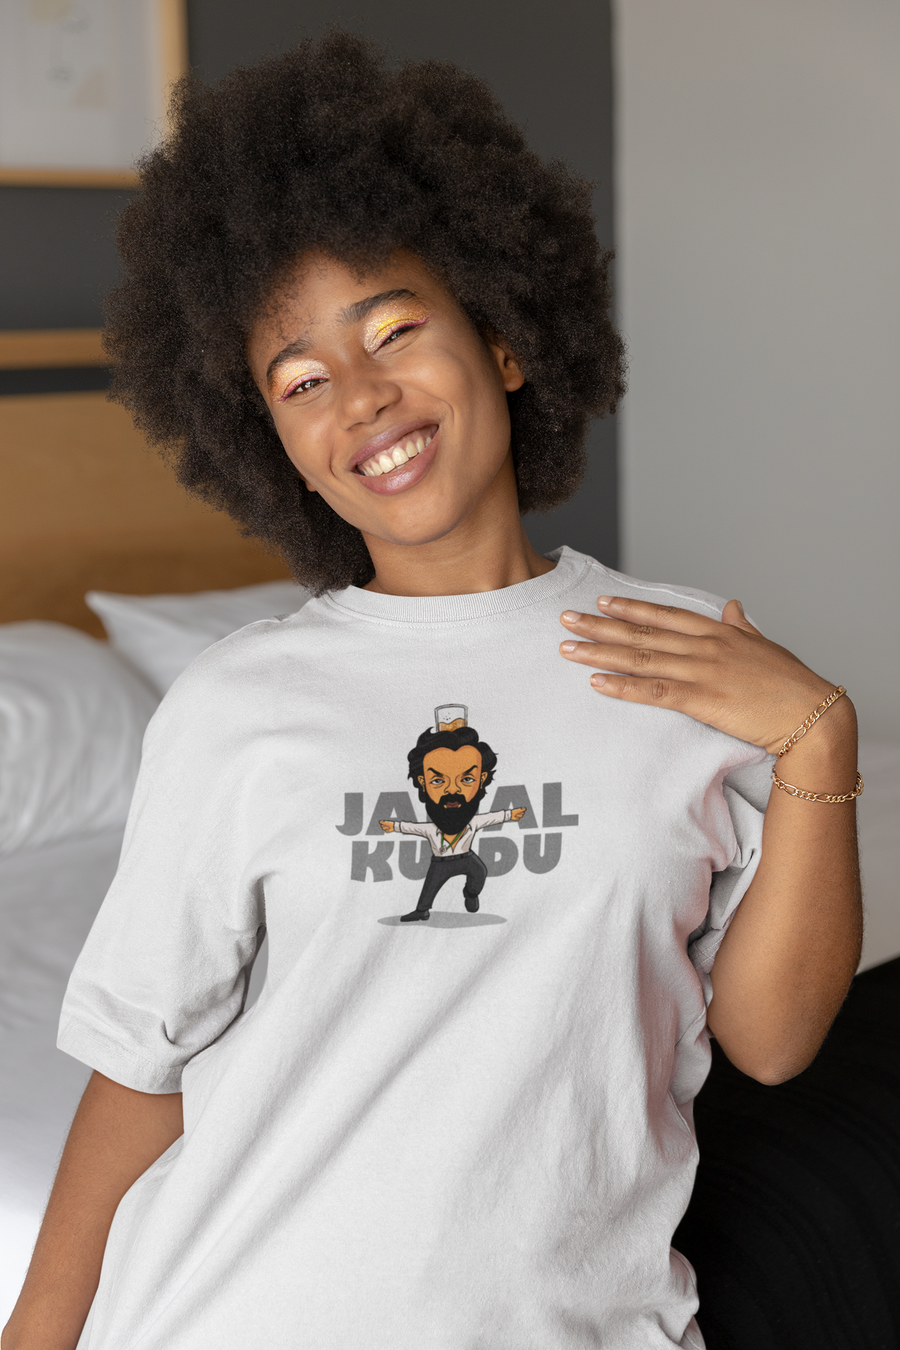 Official Animal Bold Bobby Kudu Art Oversize T-shirt